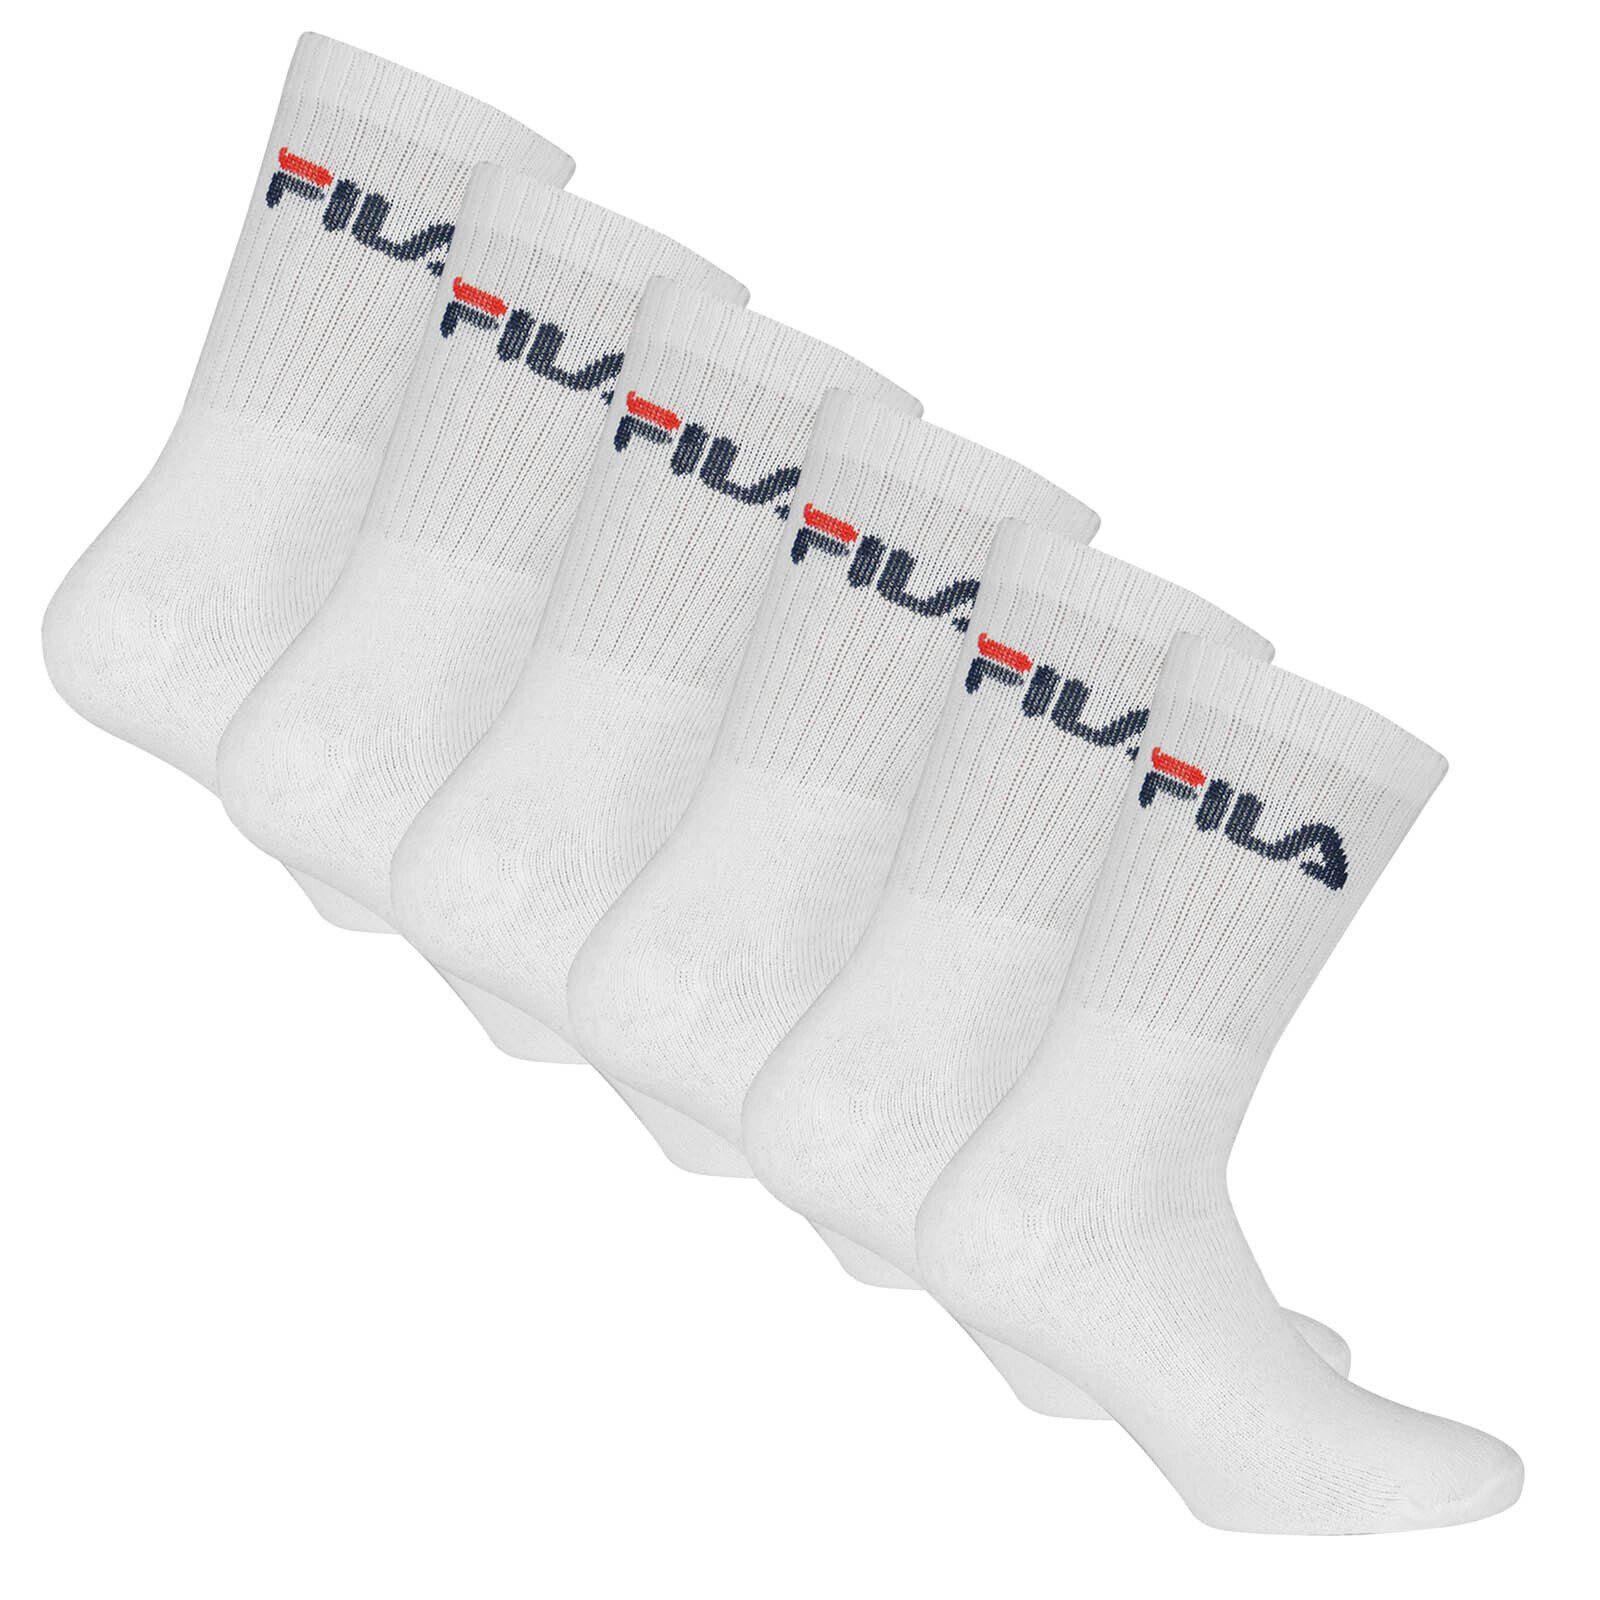 Sportsocken Socken, 6er Unisex Weiß Fila Socks, Frottee Pack - Crew